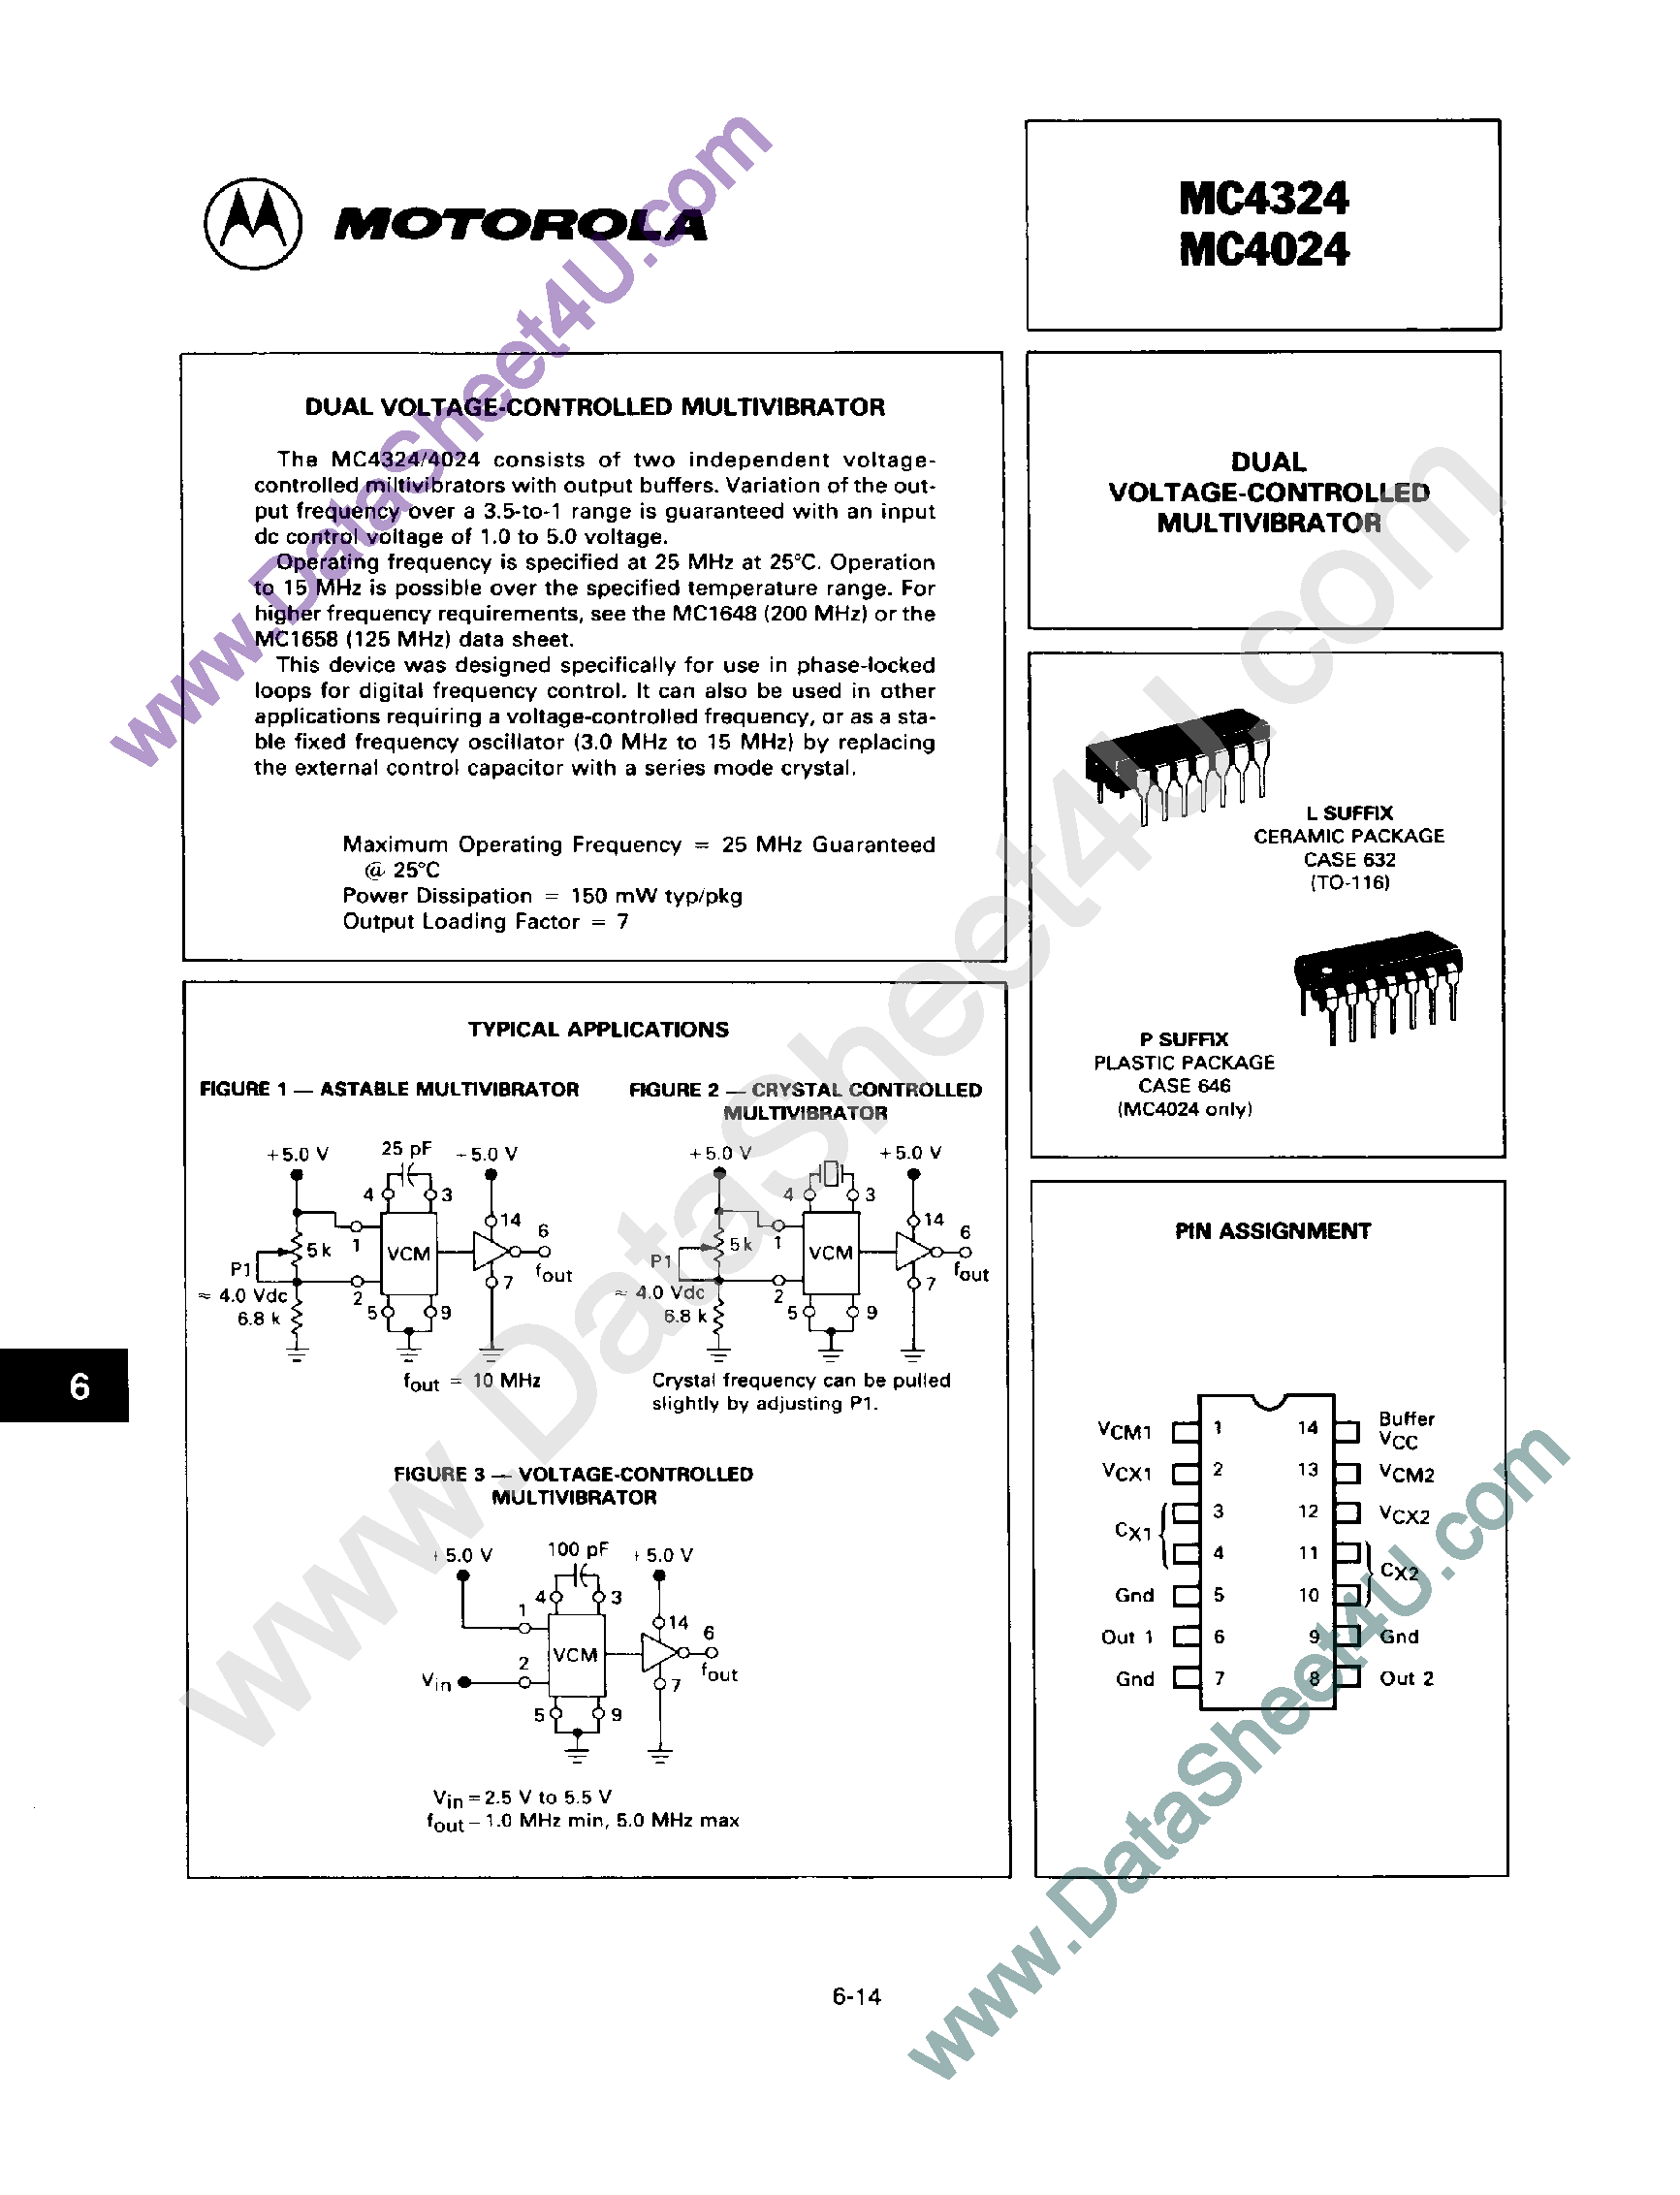 Datasheet MC4024 - (MC4024 / MC4324) Dual Voltage Controlled Multivibartor page 1